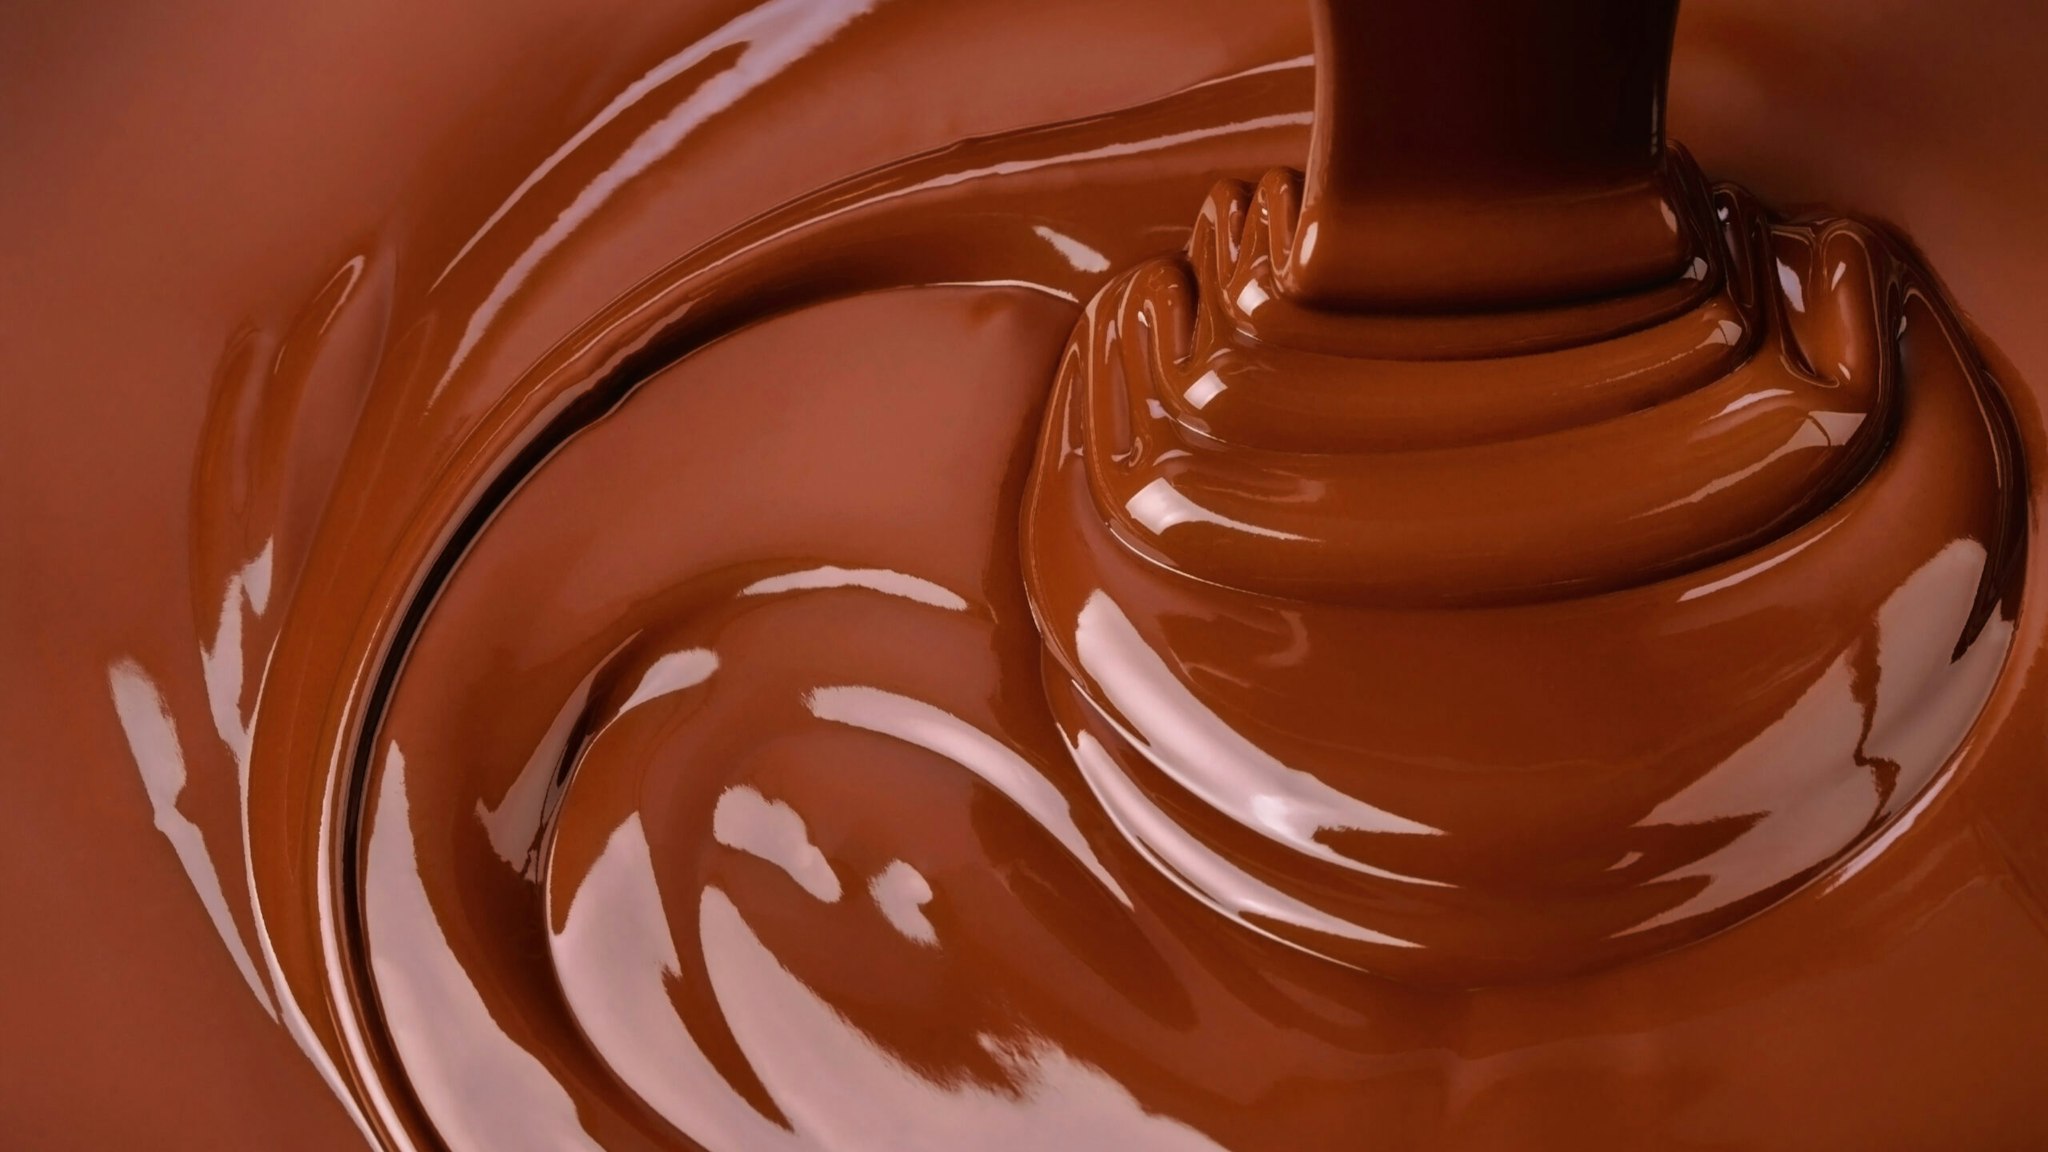 Stream melt chocolate spreads in waves.